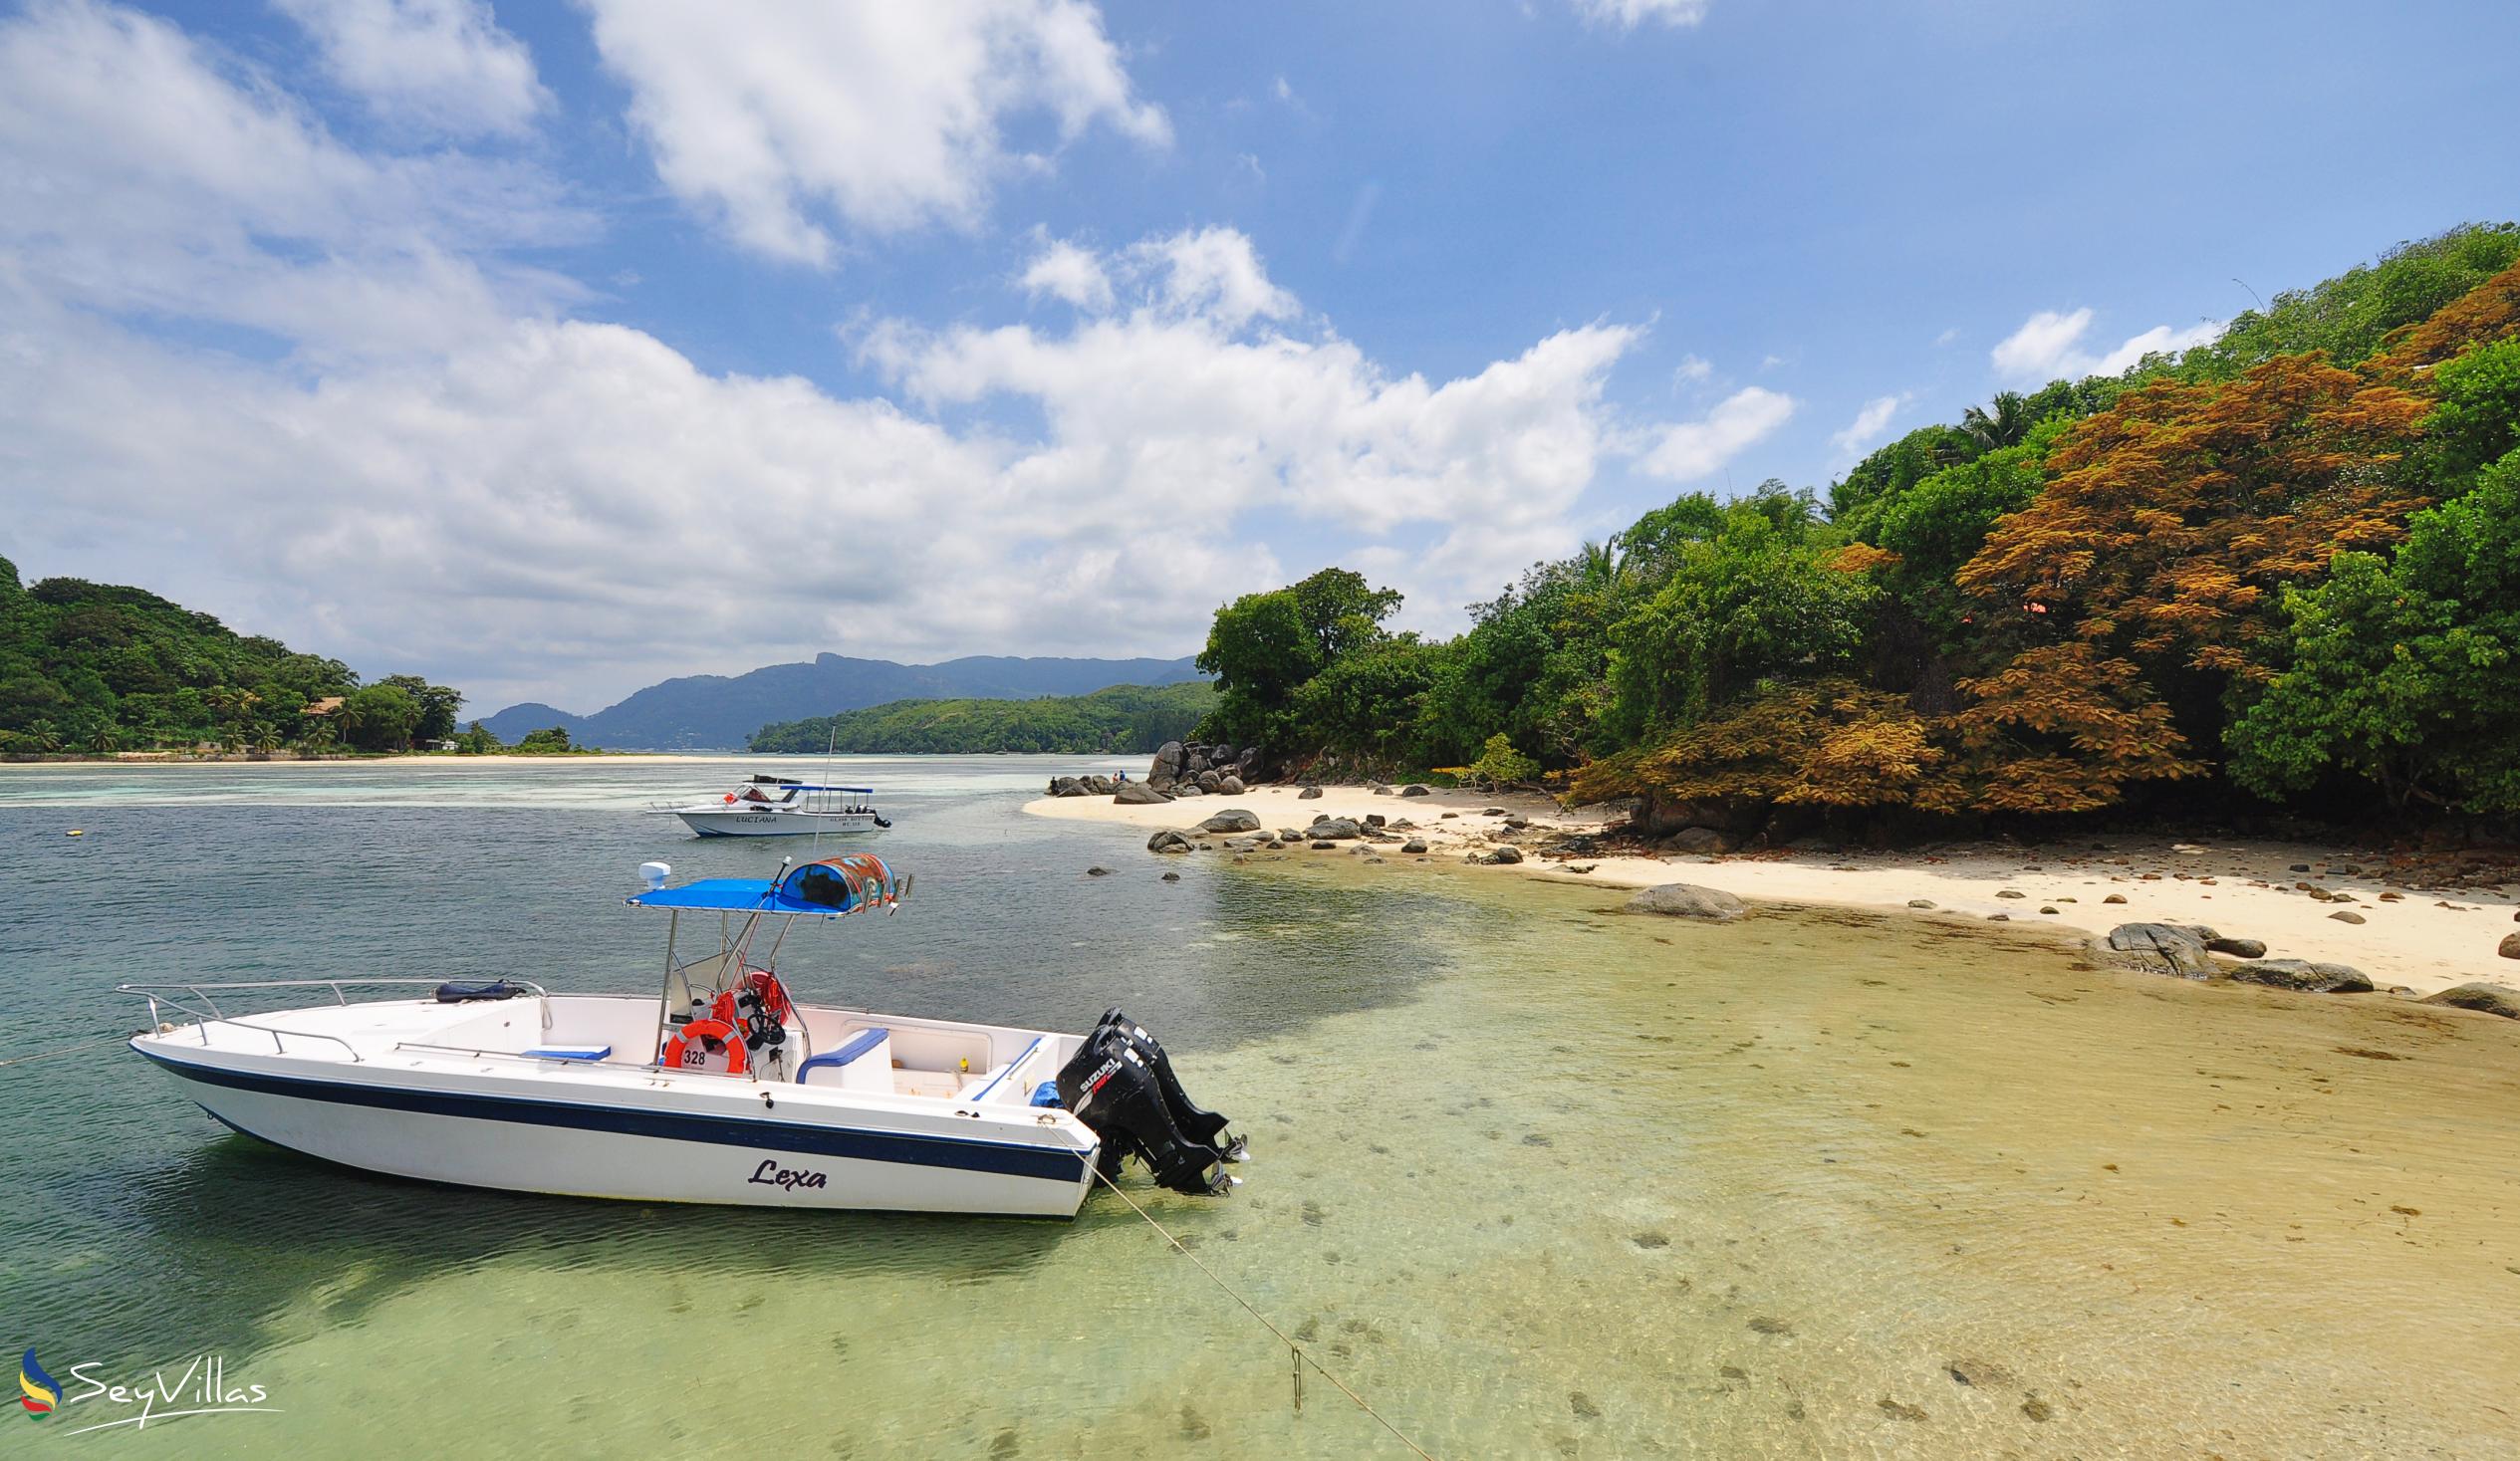 Photo 79: JA Enchanted Island Resort - Location - Round Island (Seychelles)